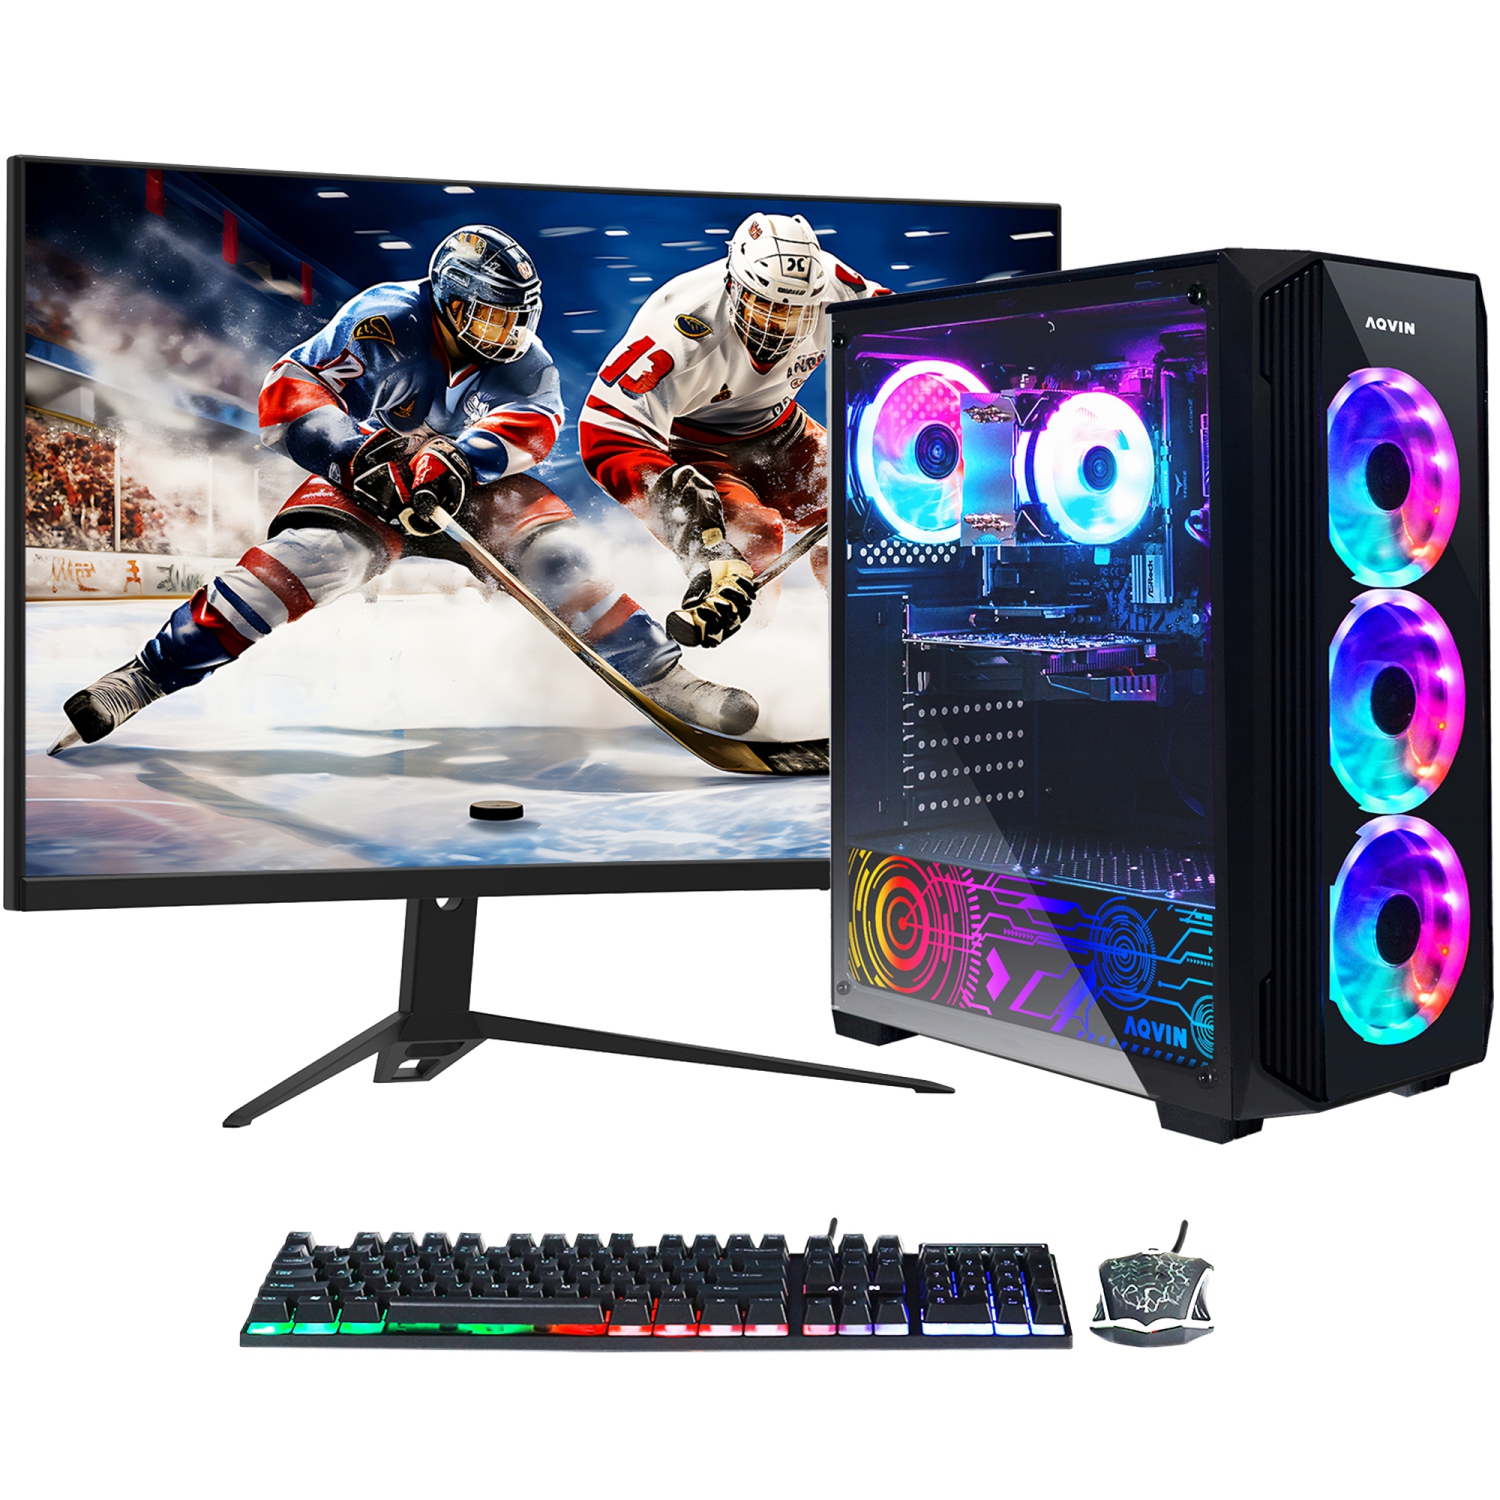 AQVIN Prebuilt Gaming PC Desktop Computer, RTX 3060 12GB, Intel Core i7 Processor, 32GB DDR4 RAM, 2000GB (Fast Boot) SSD, Windows 11 Pro, New 27 inch Curved Gaming Monitor(Z-Force)